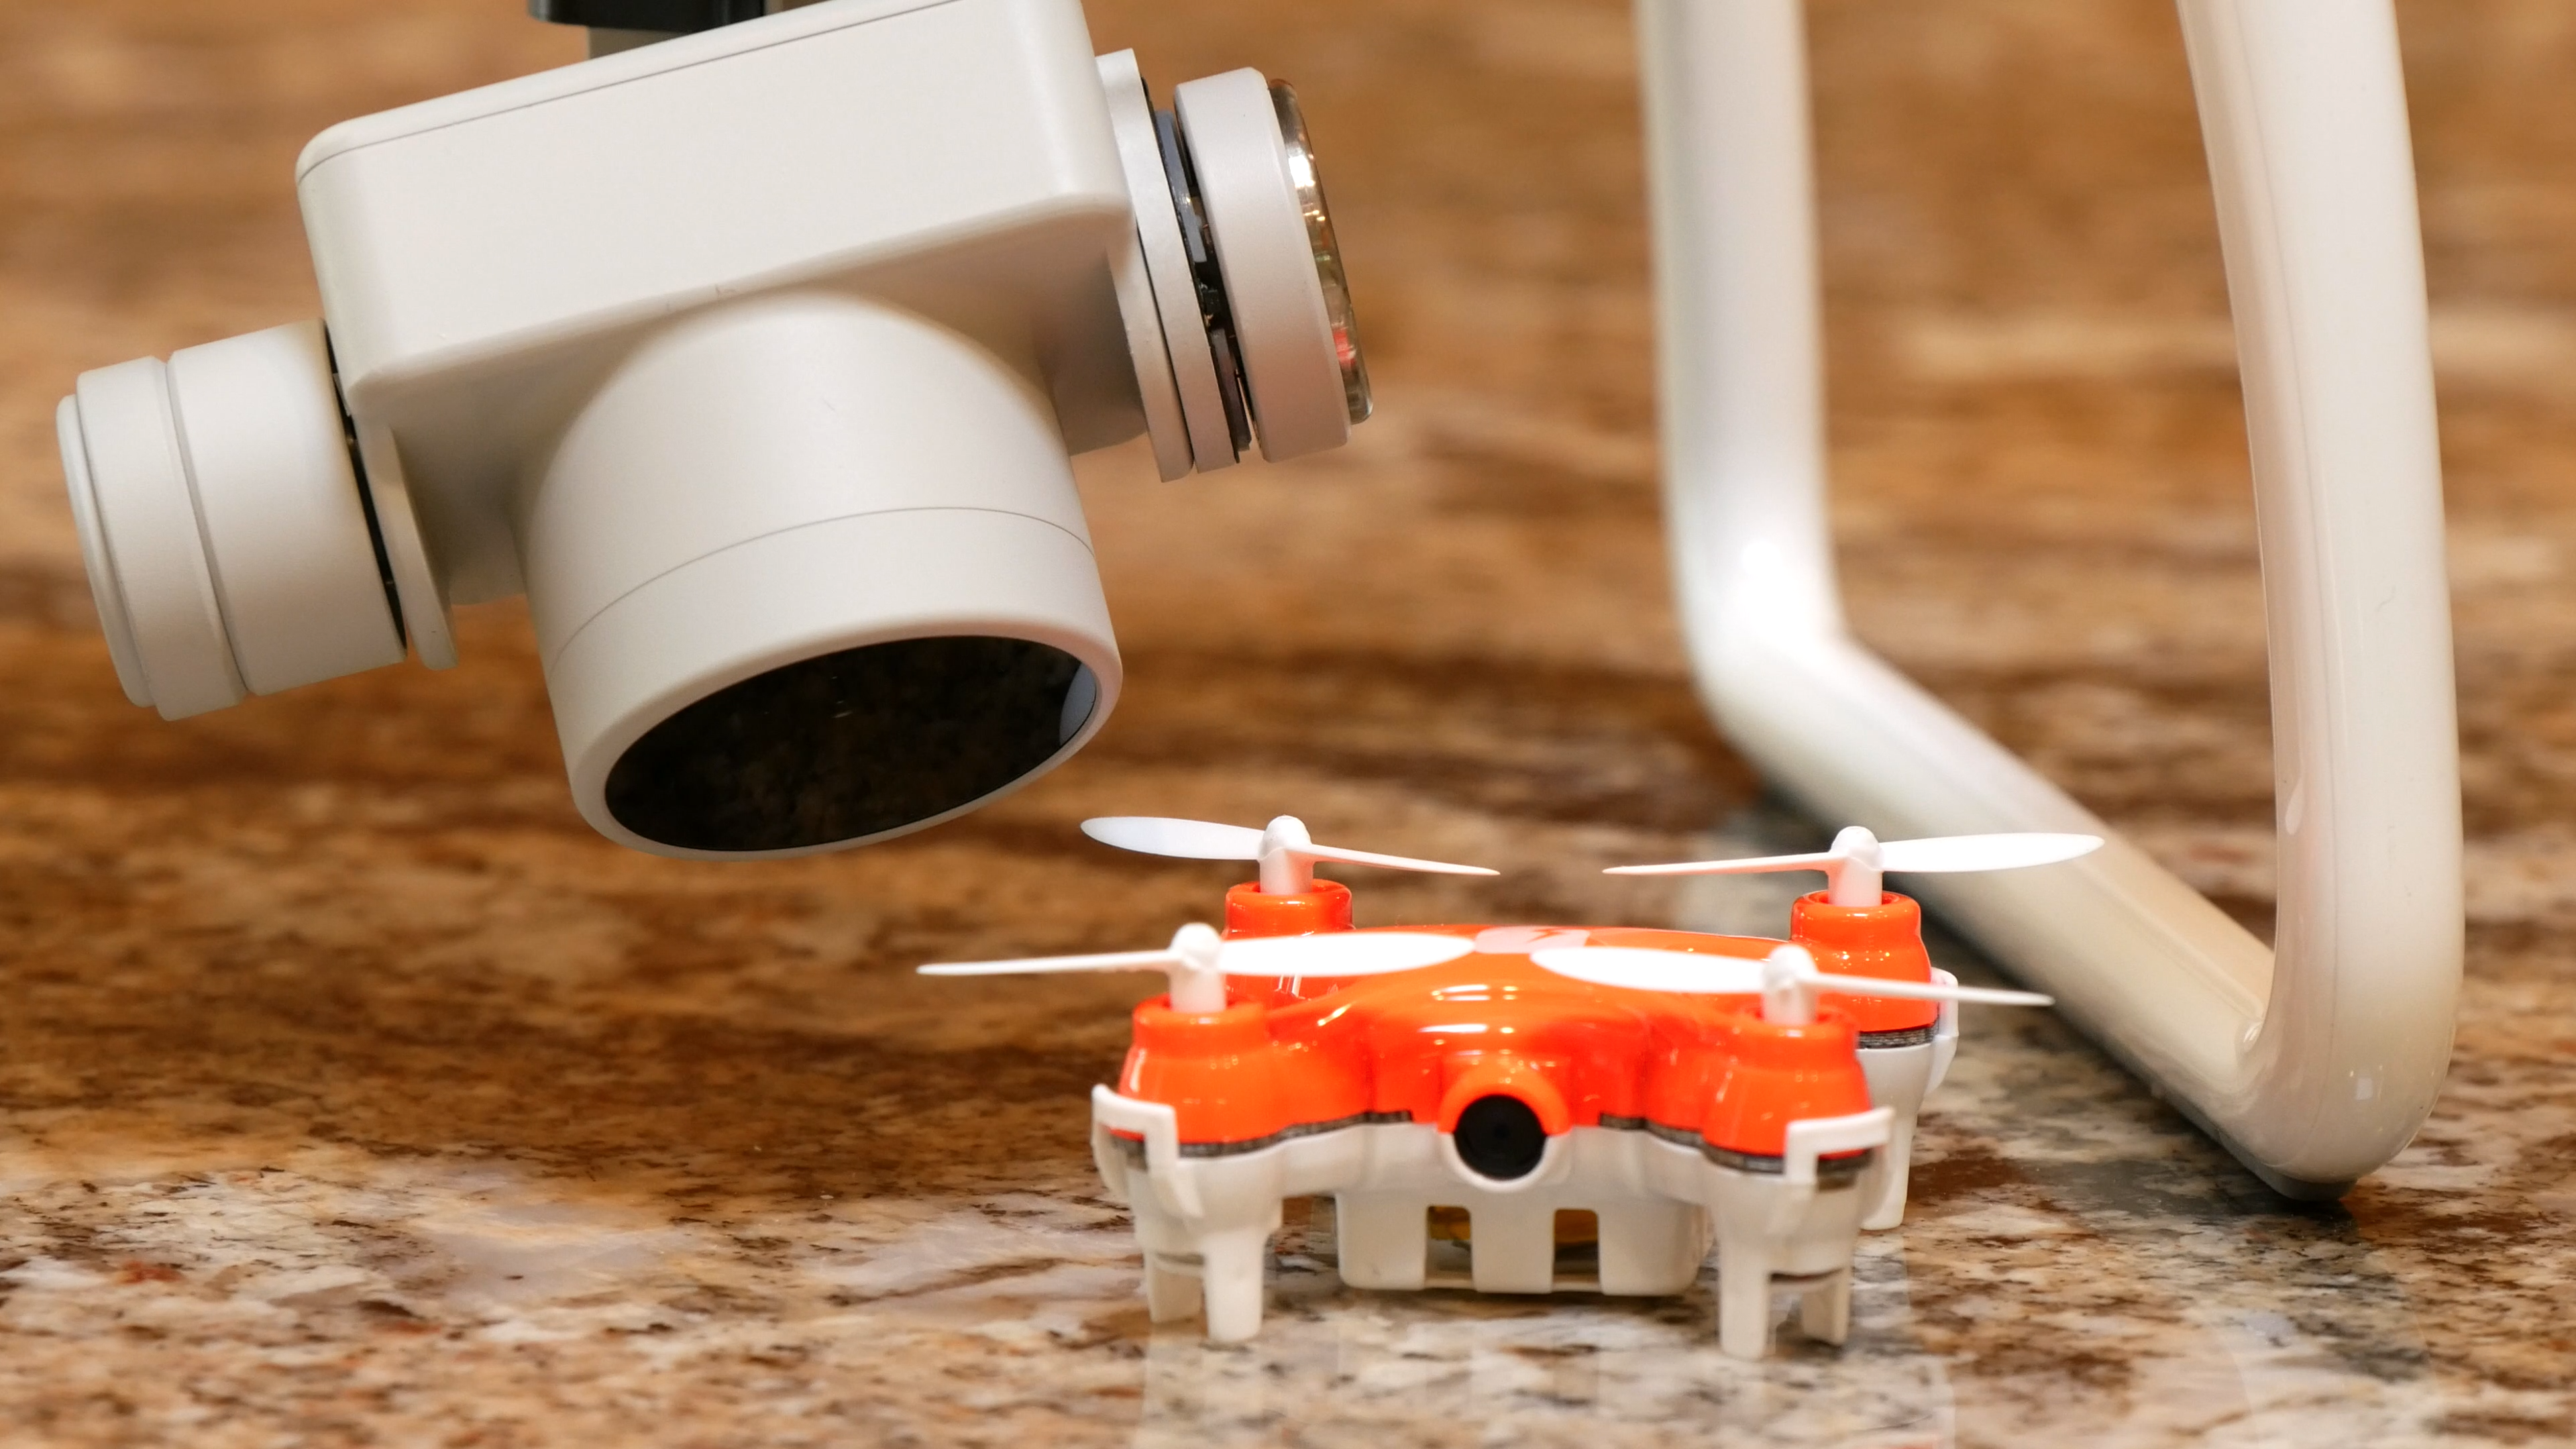 skeye nano camera drone video review skeye1